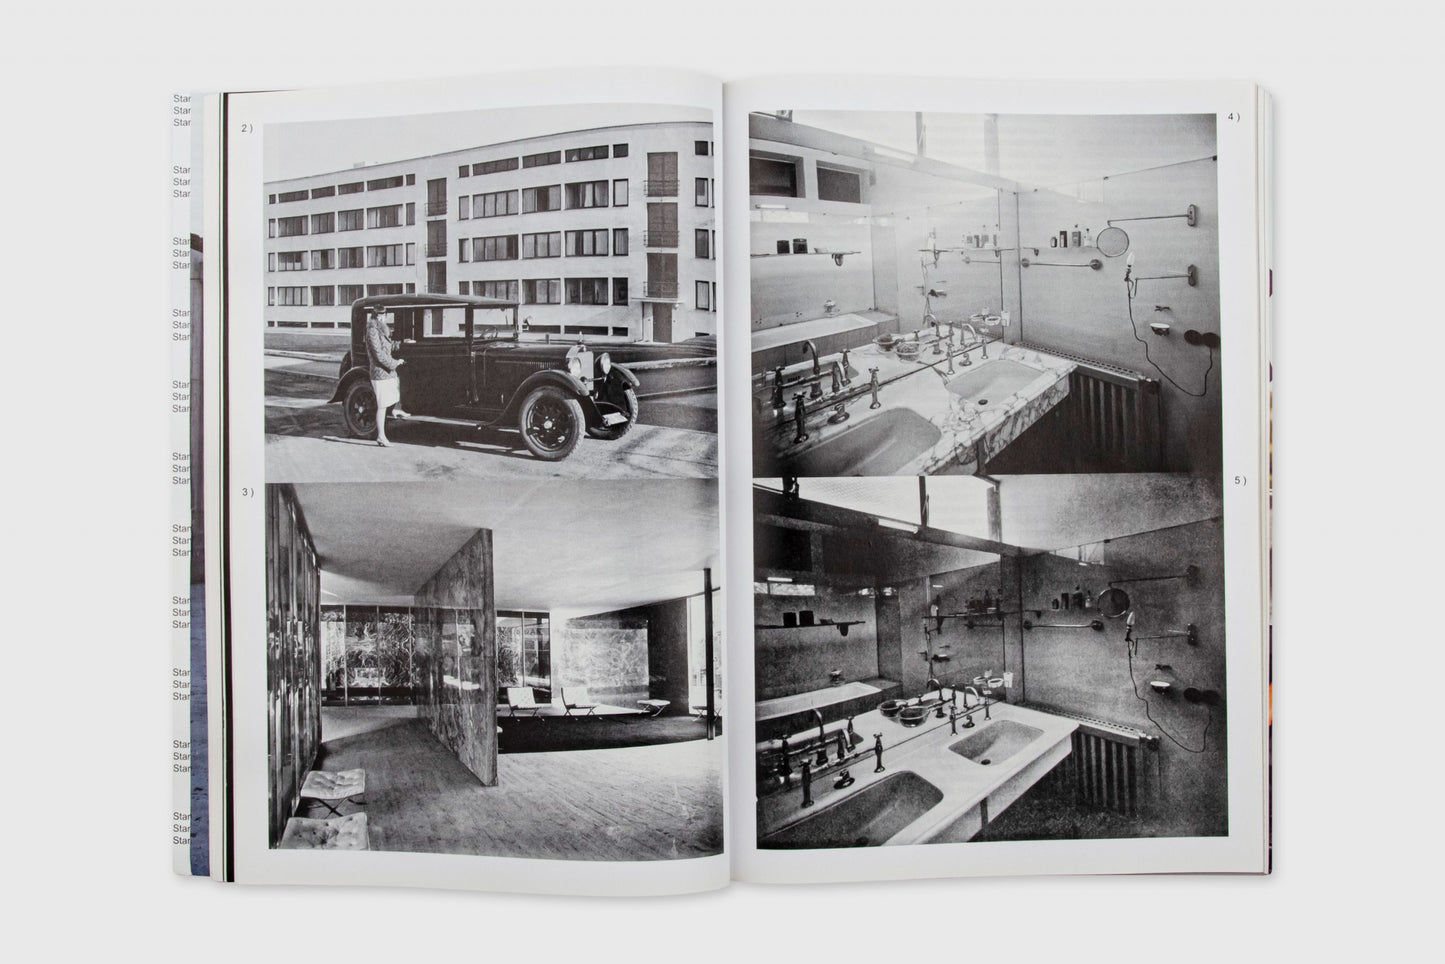 Bauhaus #10: The Bauhaus Dessau Foundation's Magazine